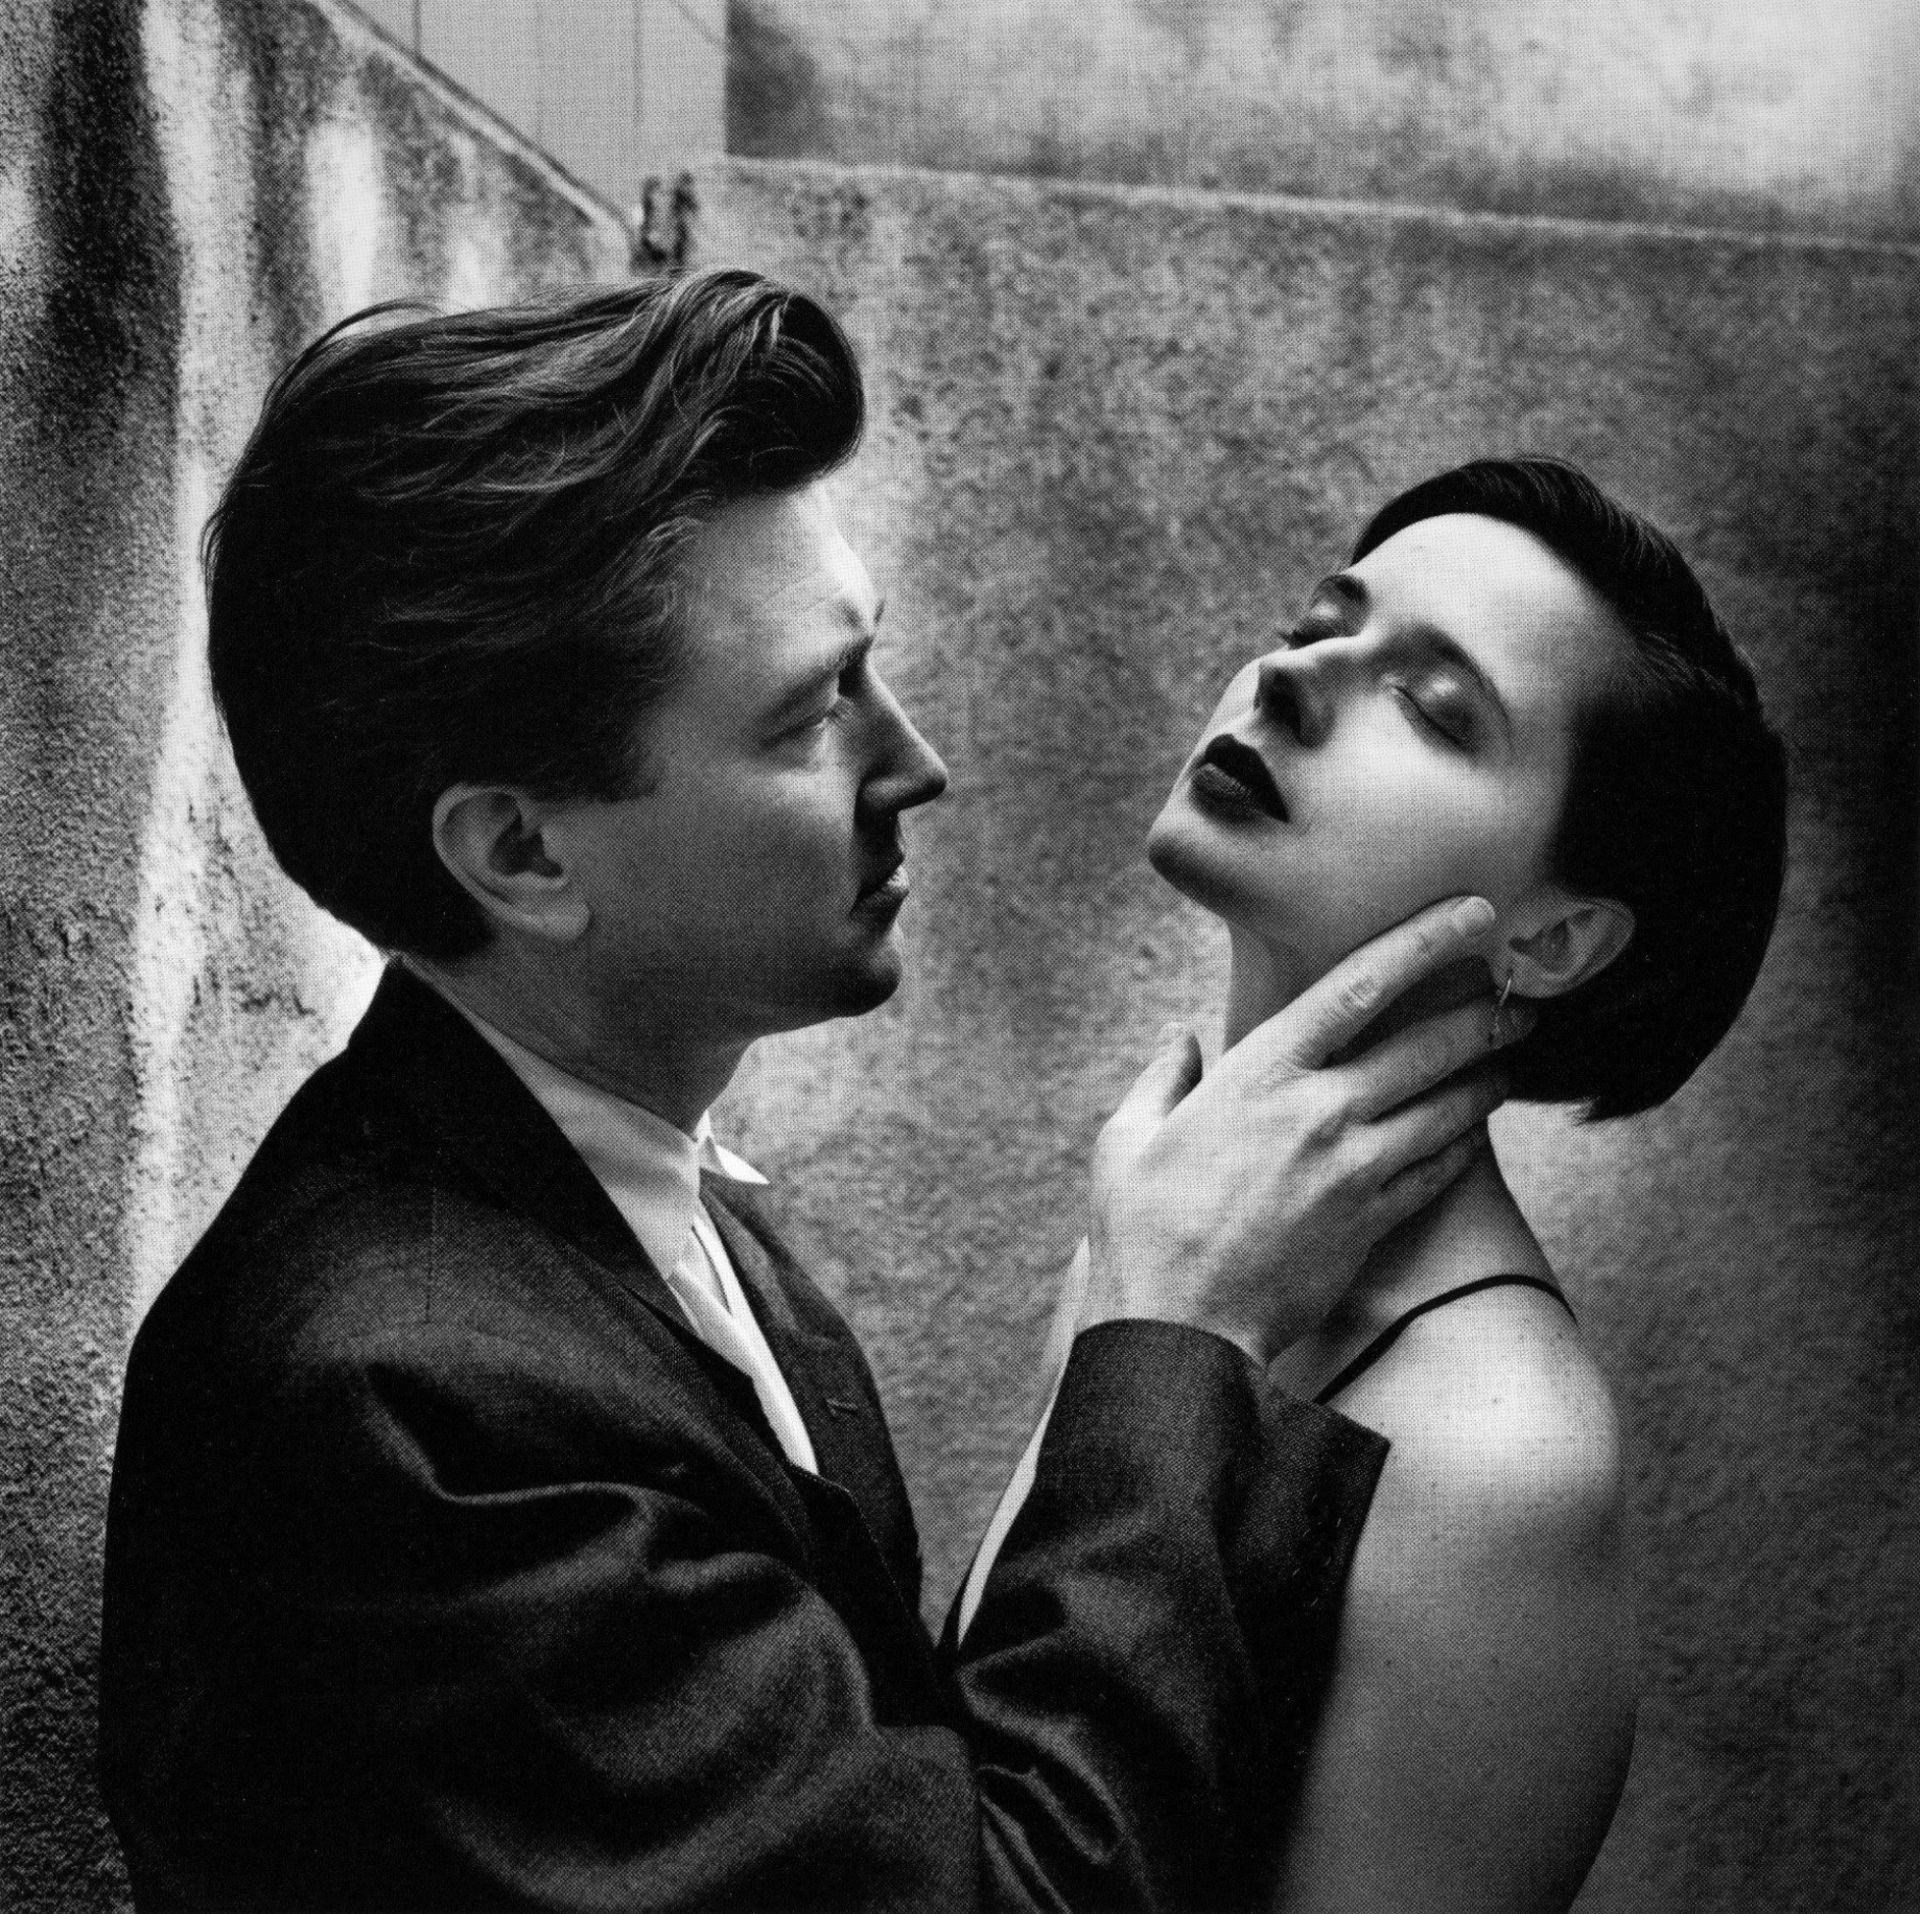 Helmut Newton "David Lynch and Isabella Rossellini, Los Angeles, 1988" Silver Gelatin